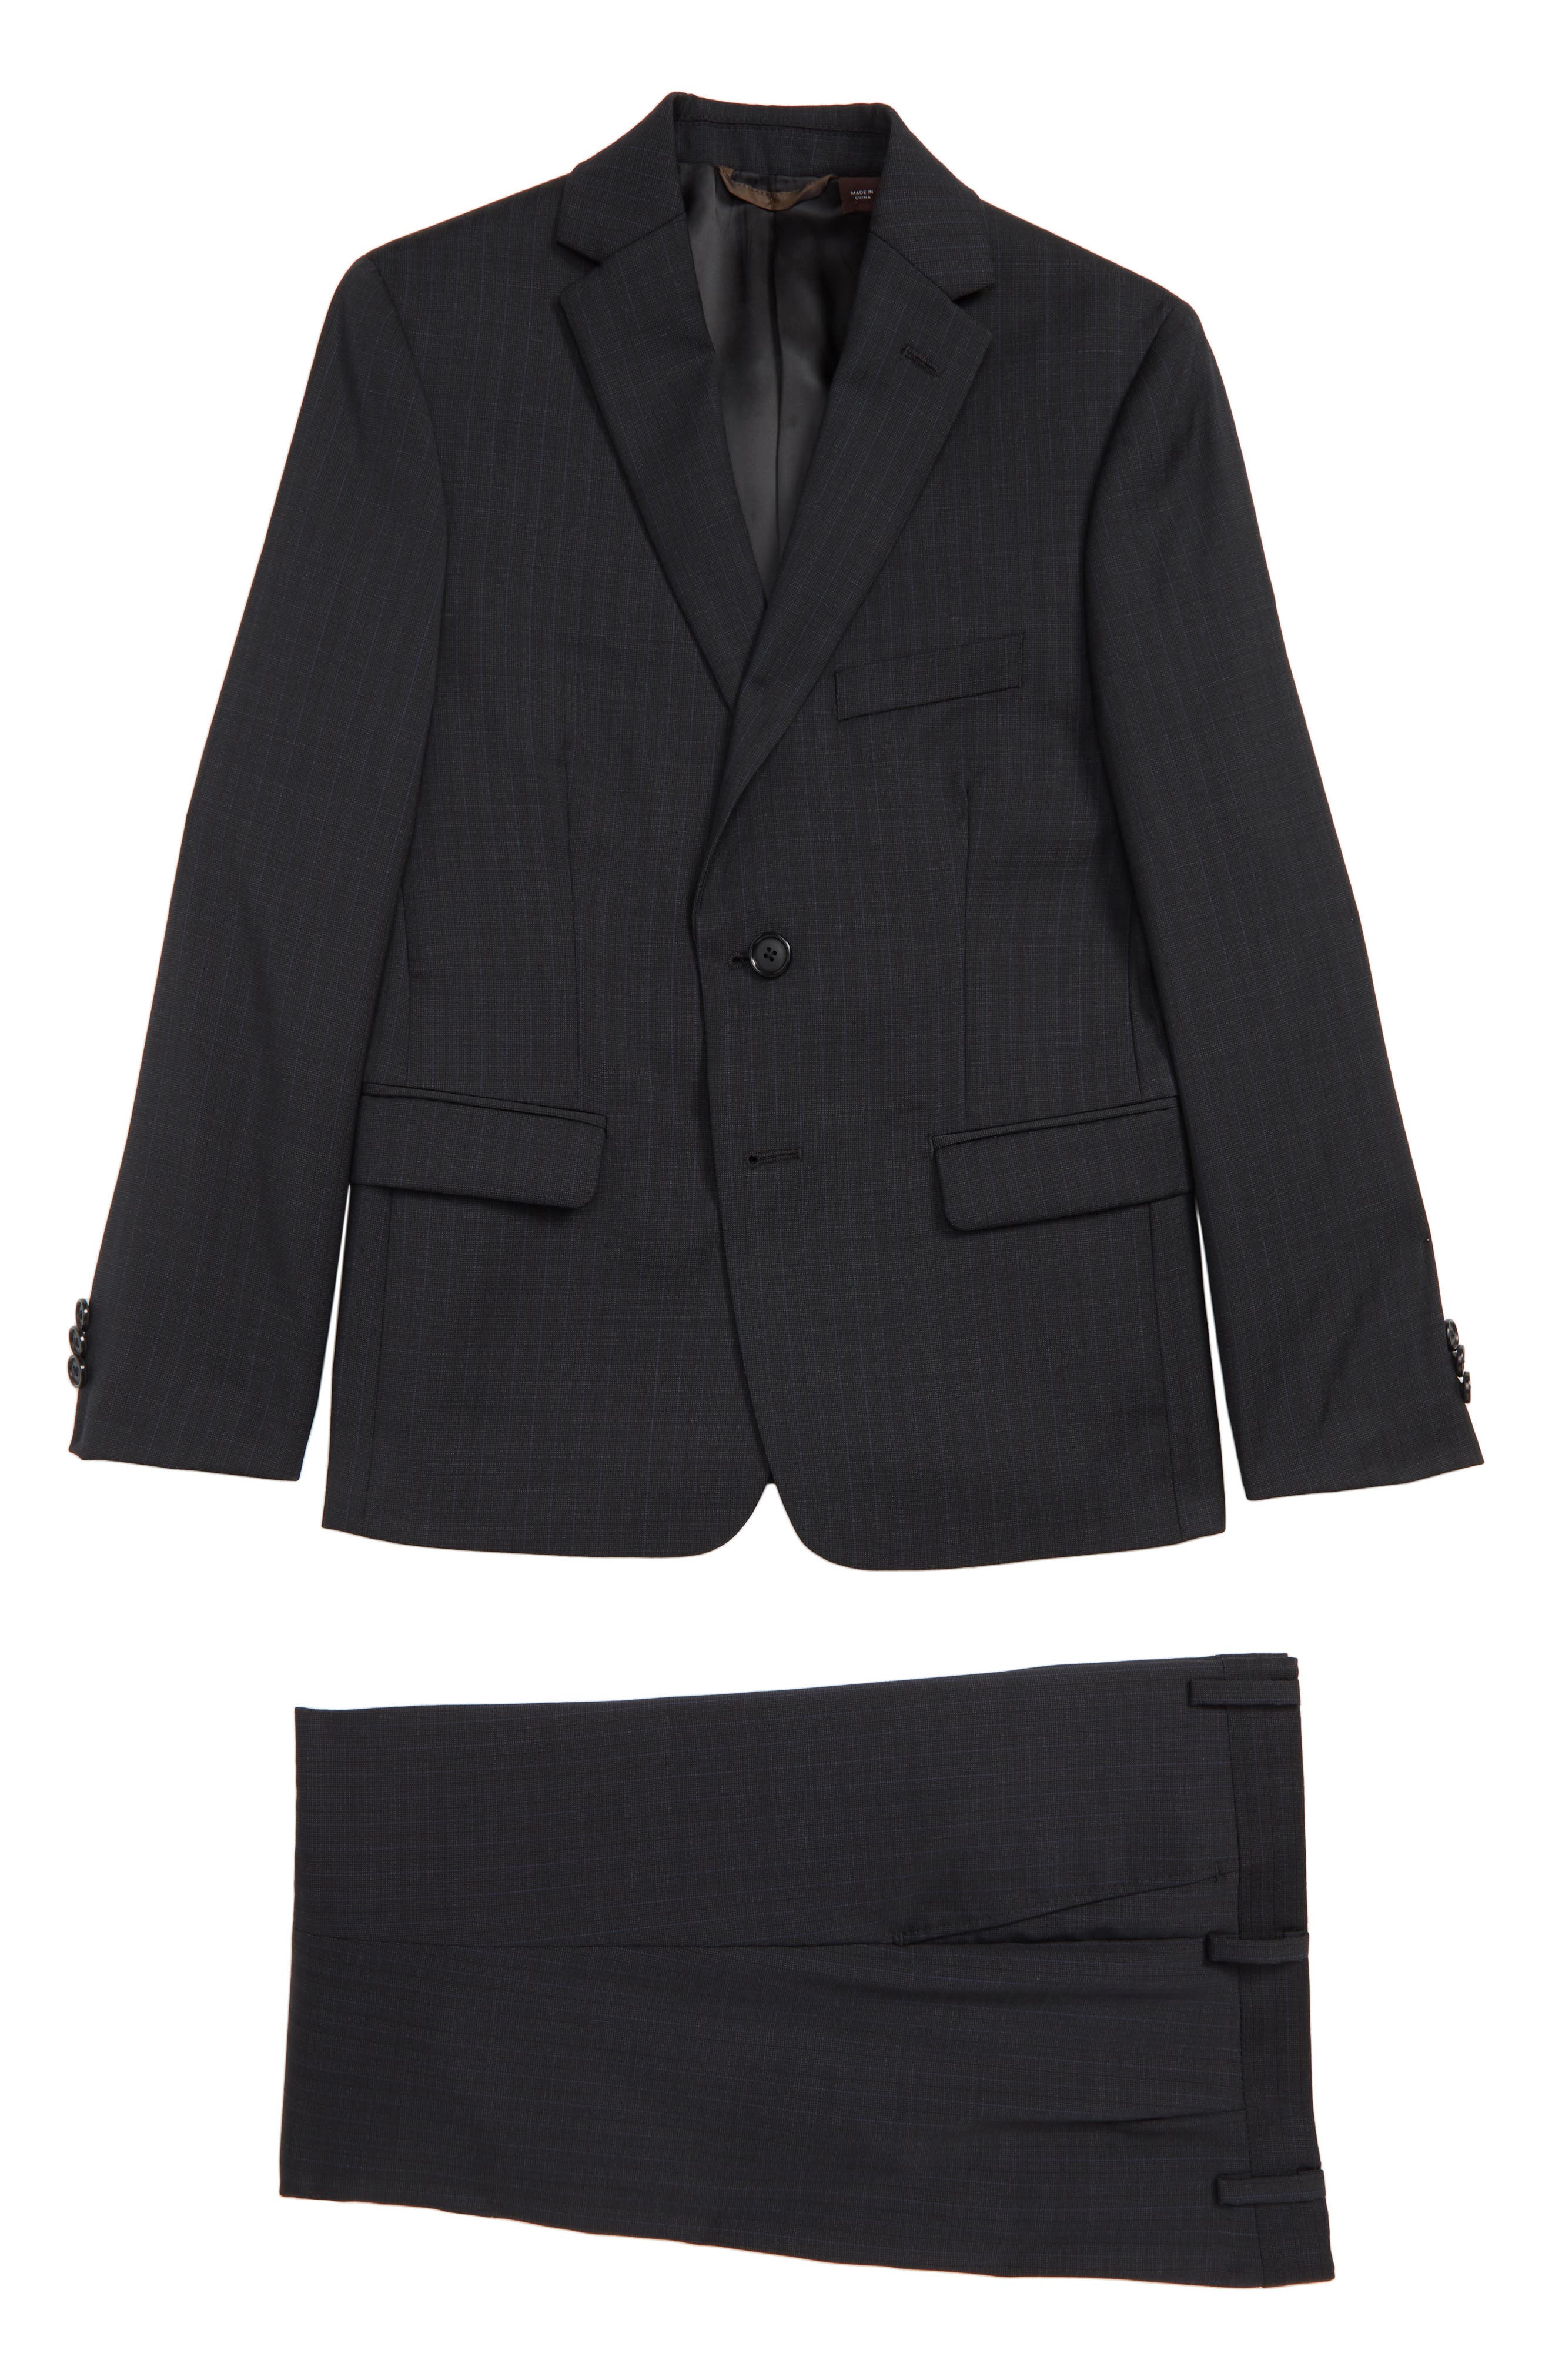 Michael Kors | Check Wool Suit 